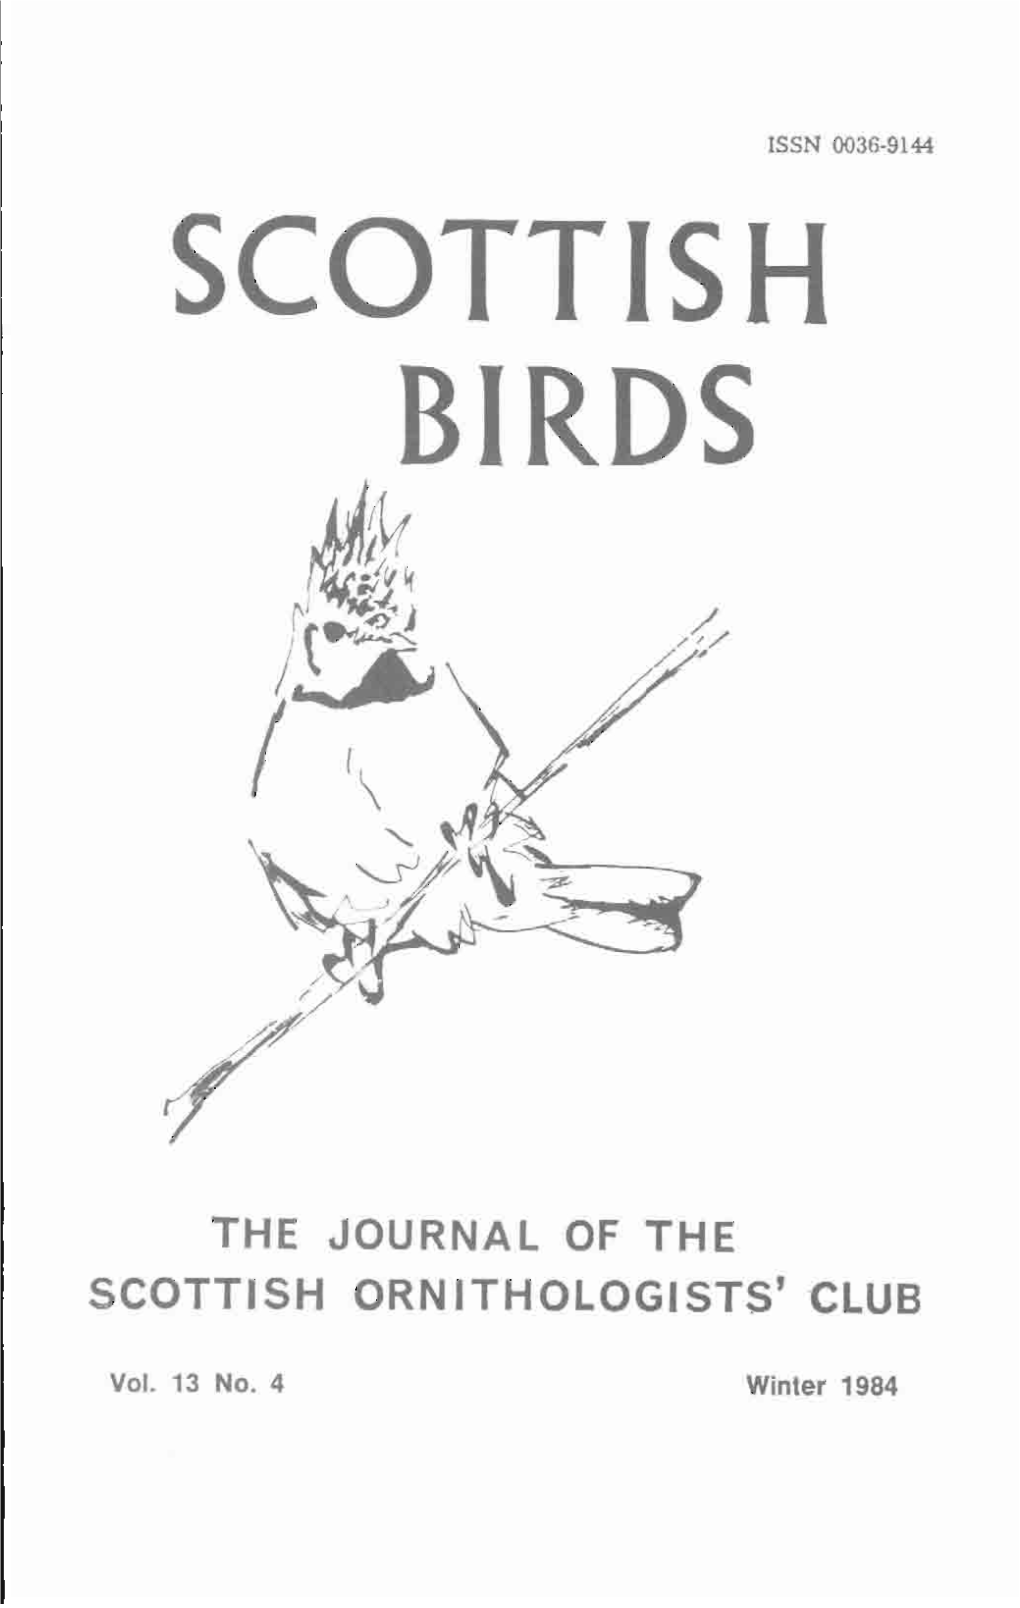 The Journal of the Scottish Ornithologists' Club